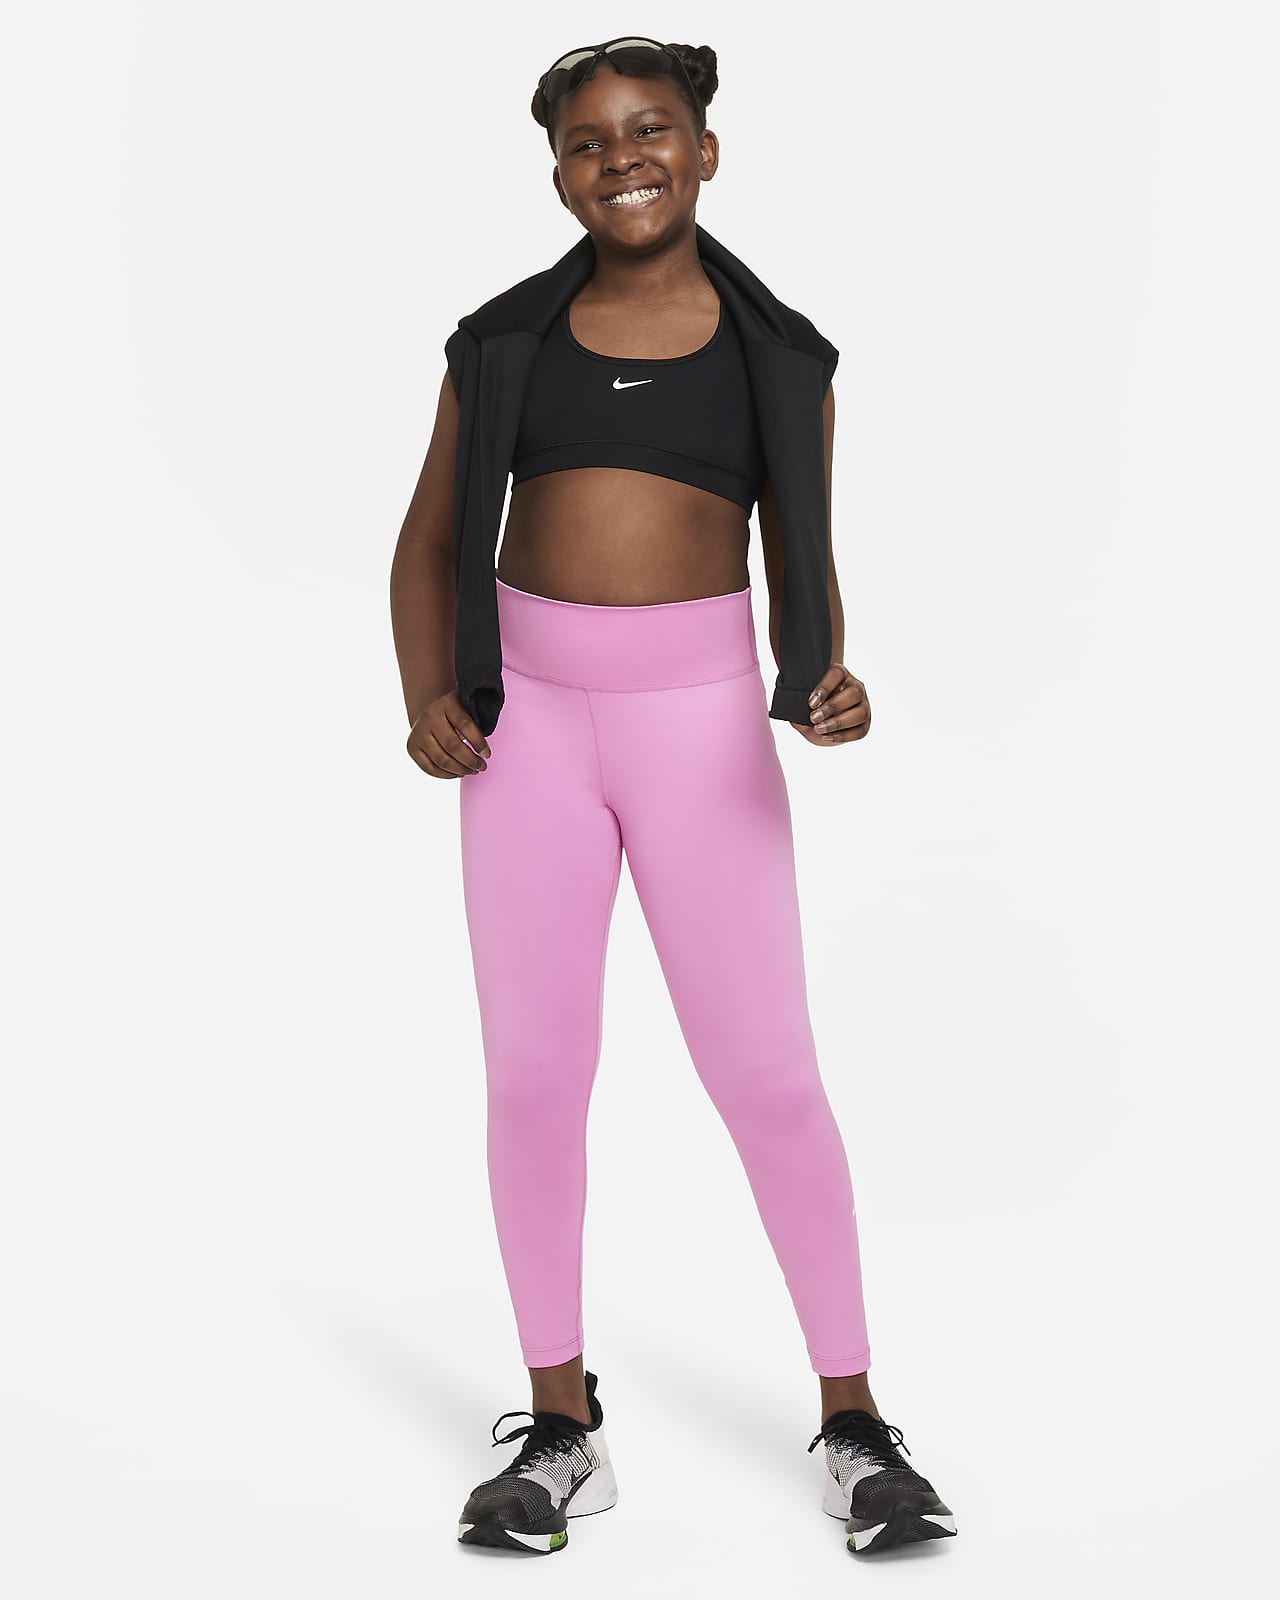 Nike Dry Girls Pink Dri-fit Athletic Leggings Stretch Sweats Yoga